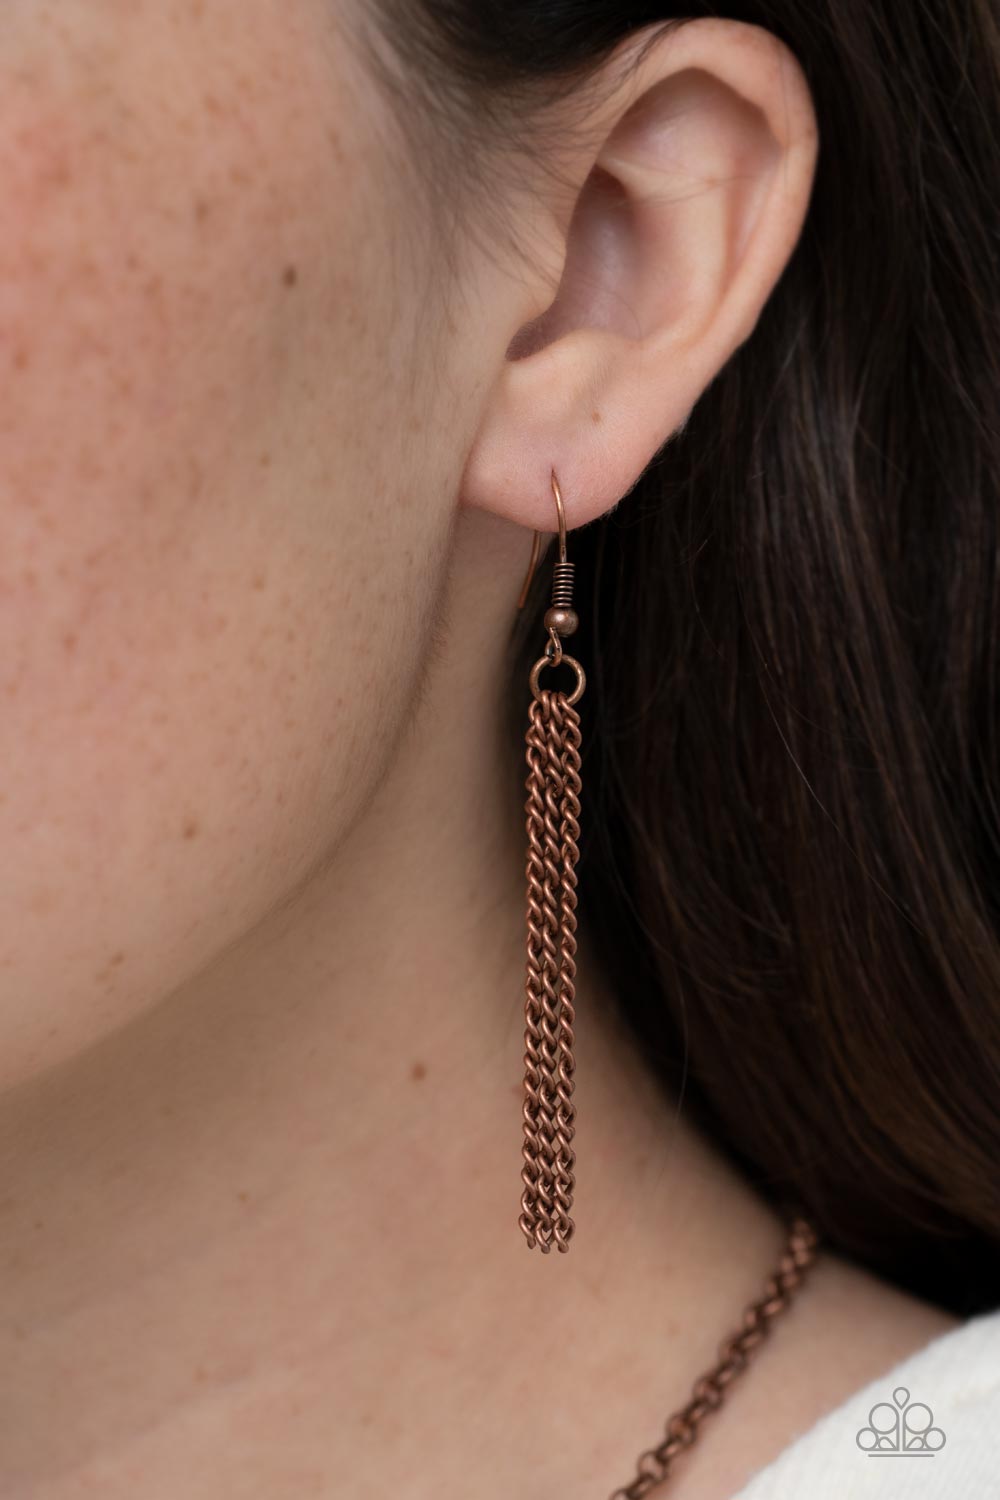 Rosy Redux - Copper necklace